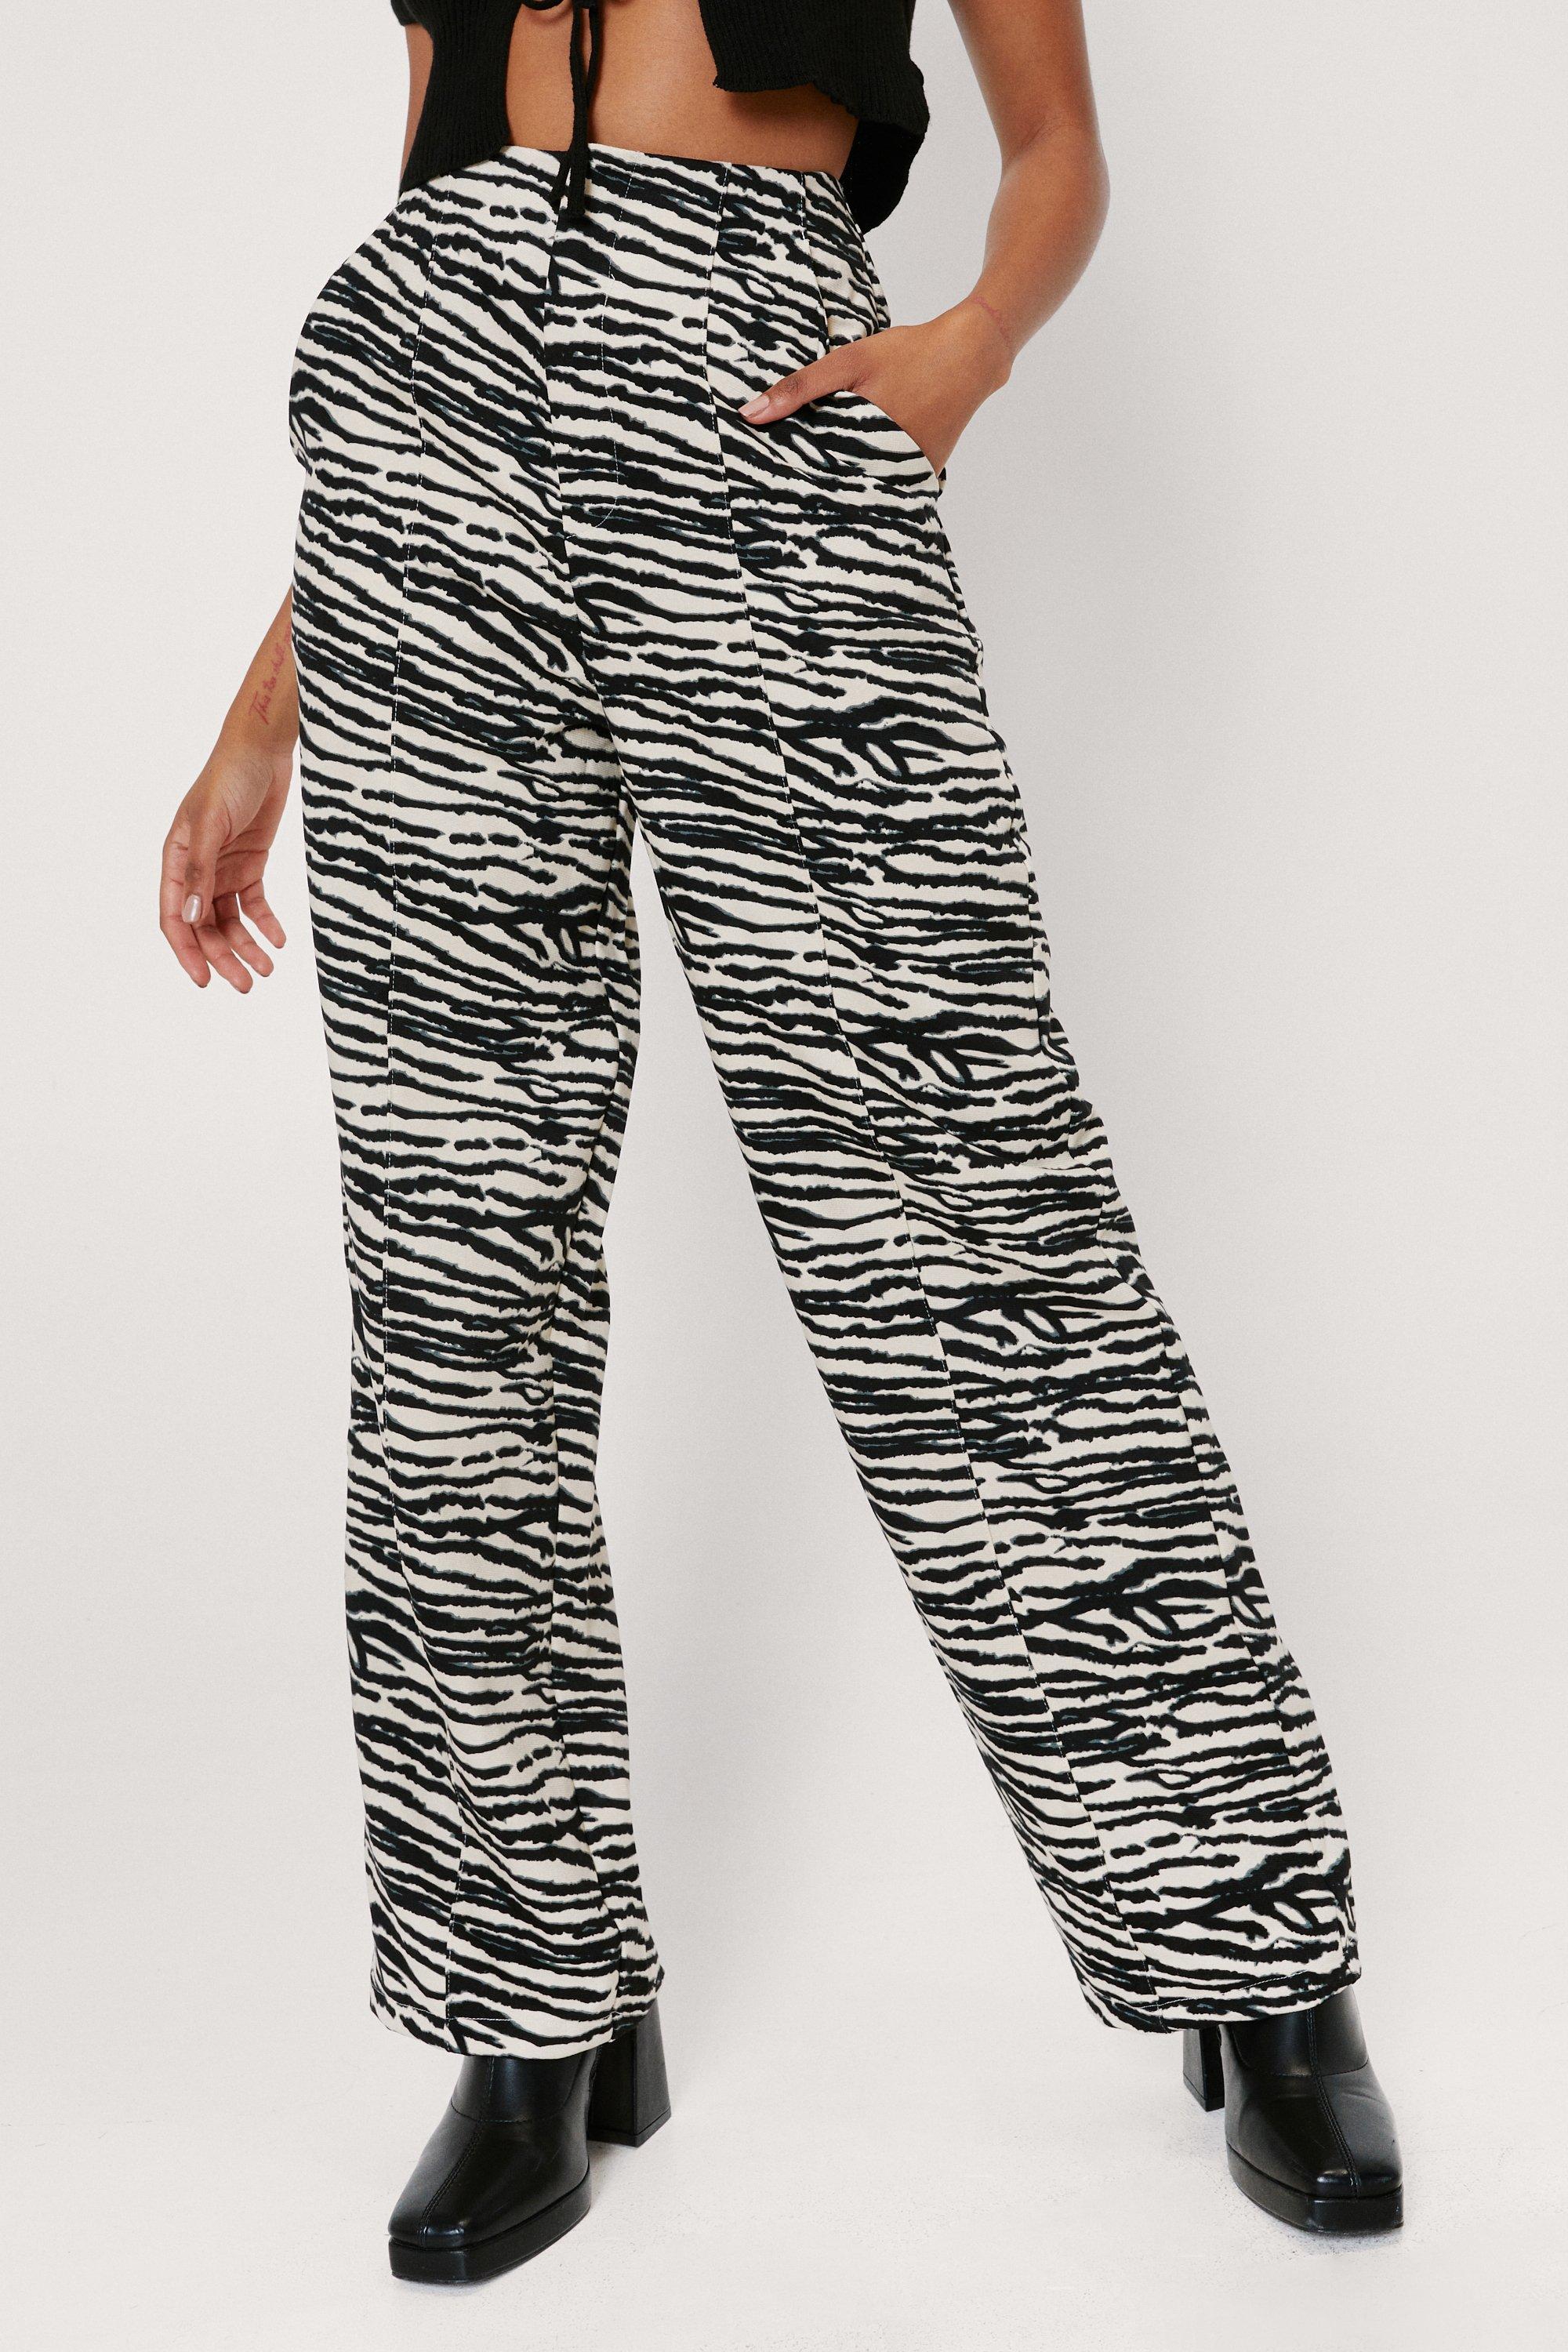 Zebra Print Trousers: 17 Pairs of Zebra Print Trousers For Women